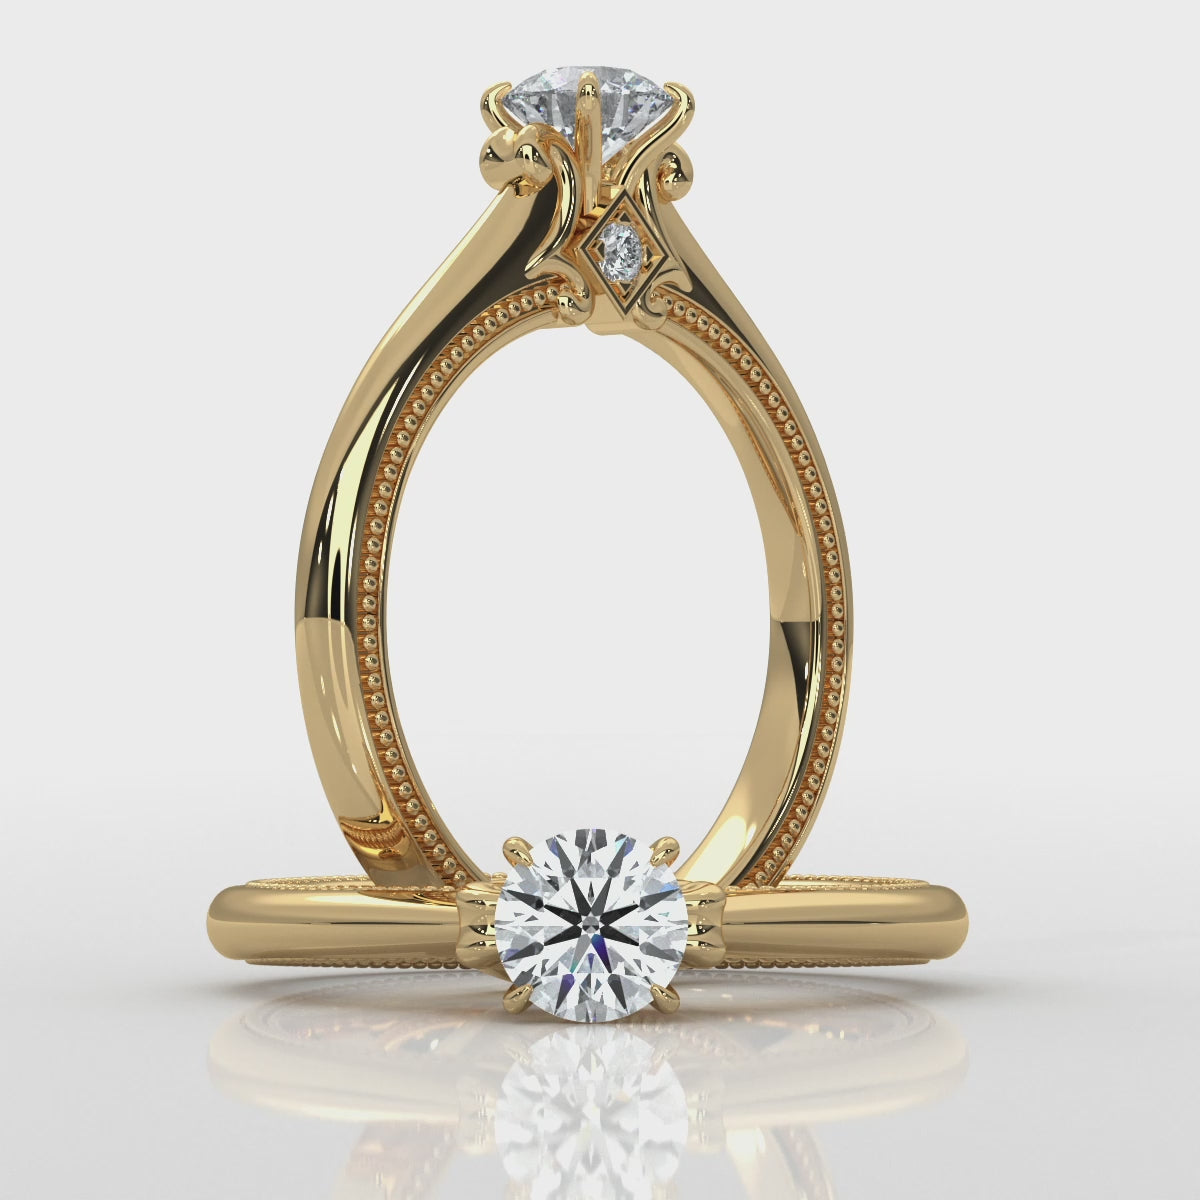 Crown - Gold Lab Grown Diamond Ring For Women